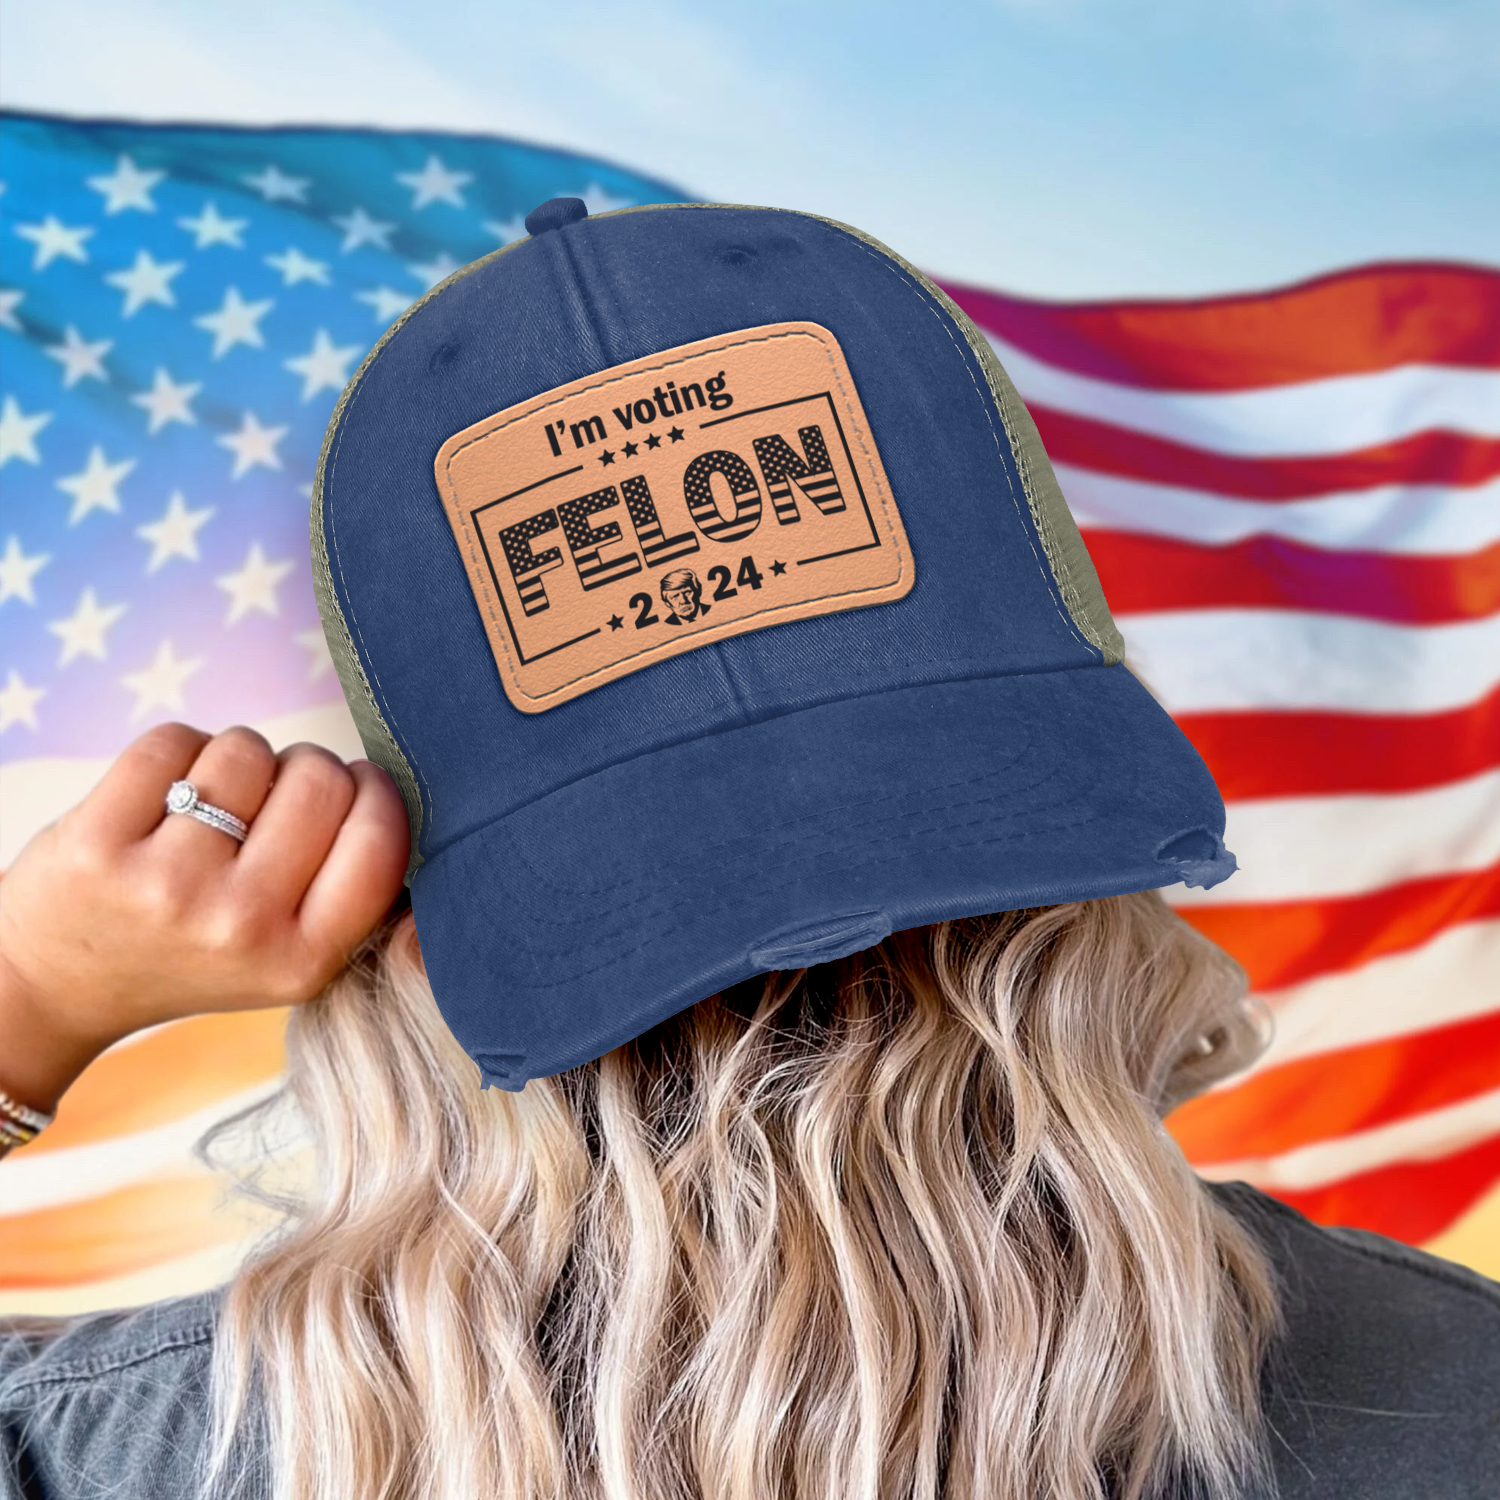 I'm Voting Felon, Trump 2024, MAGA Distressed Hat - GB-H01